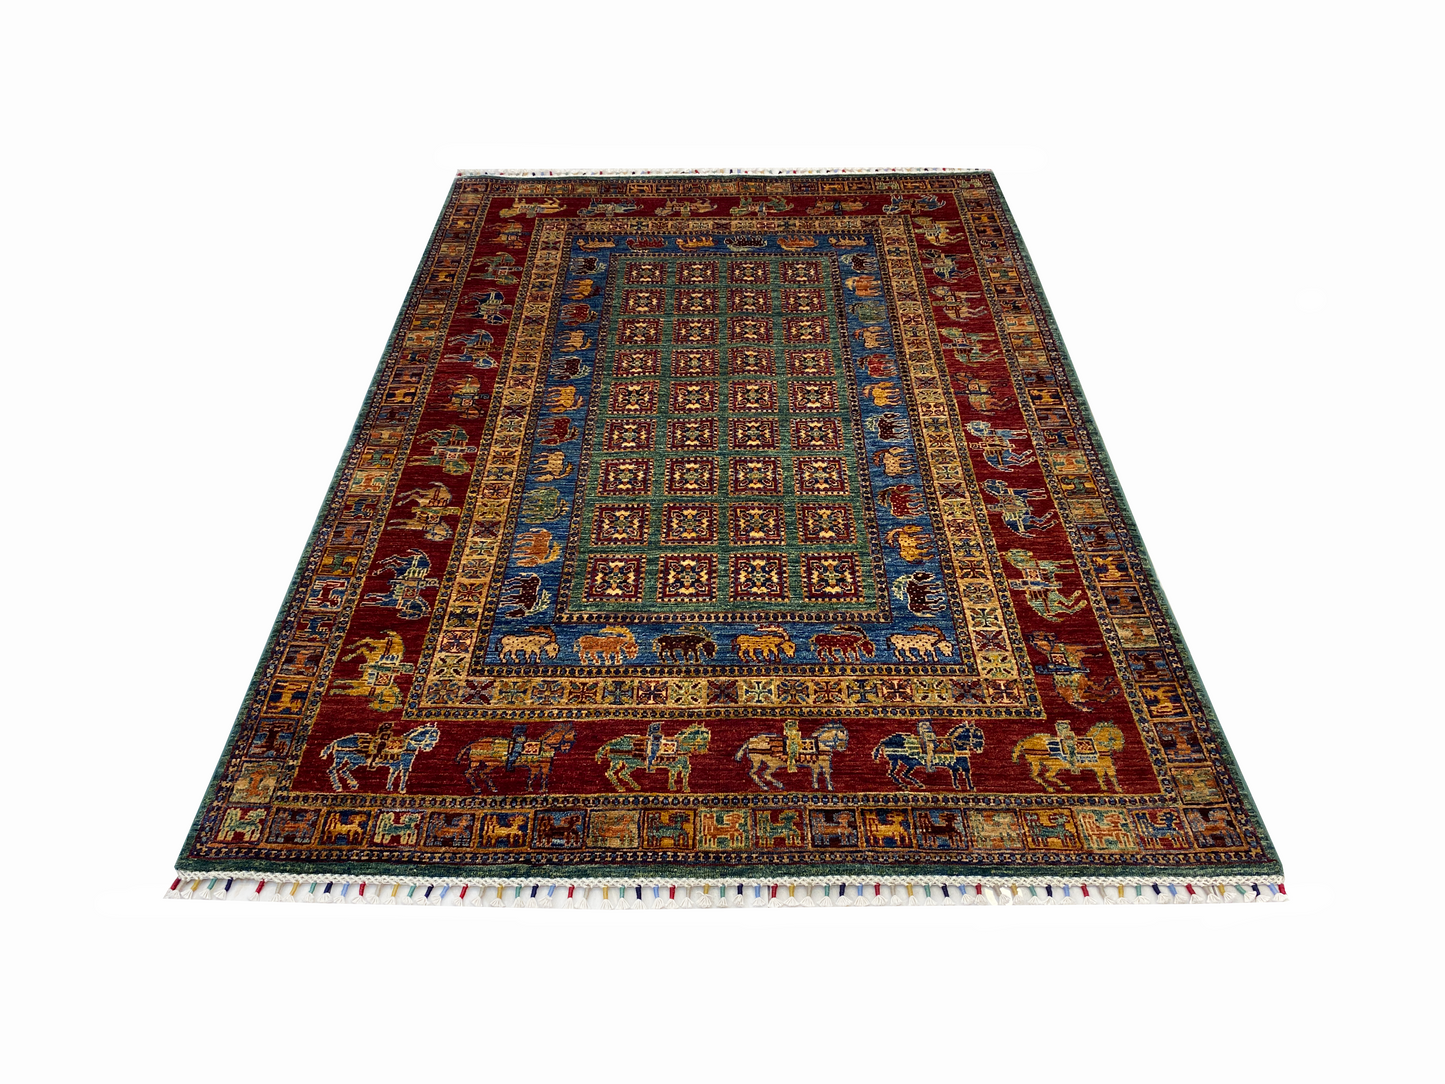 Şirvan Bicolor Carpet 212 x 151 cm